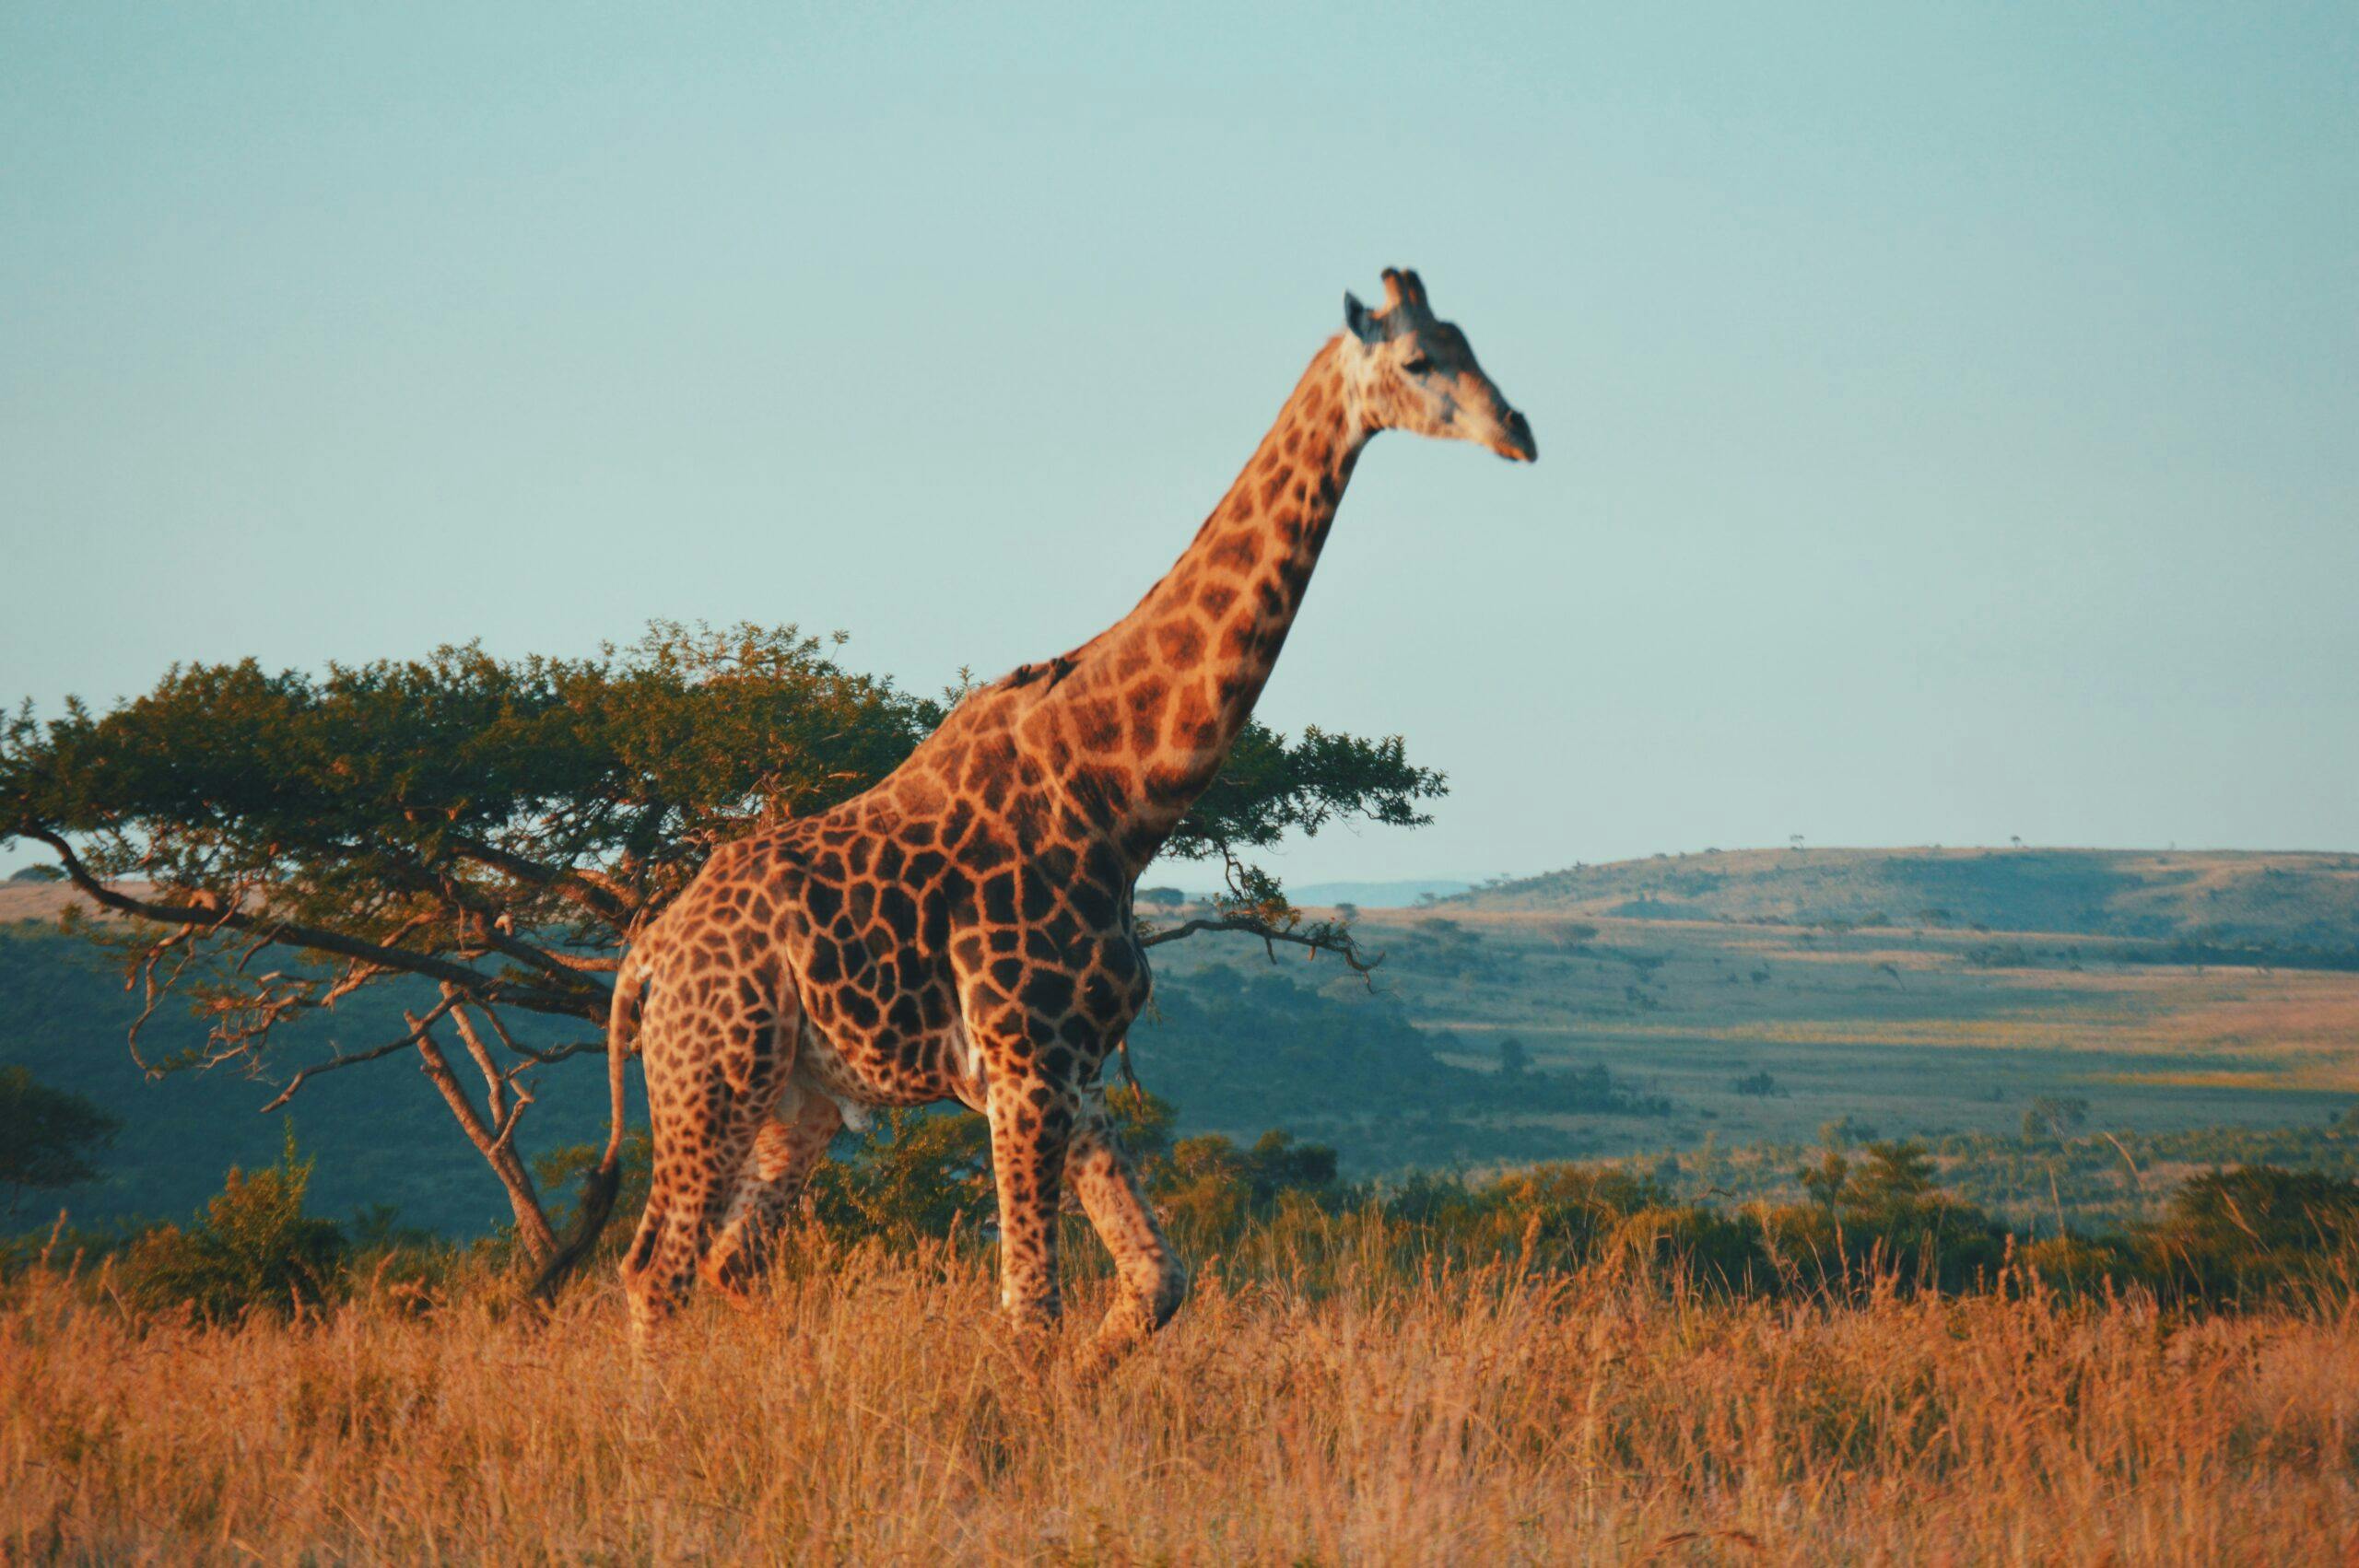 where is best safari in africa